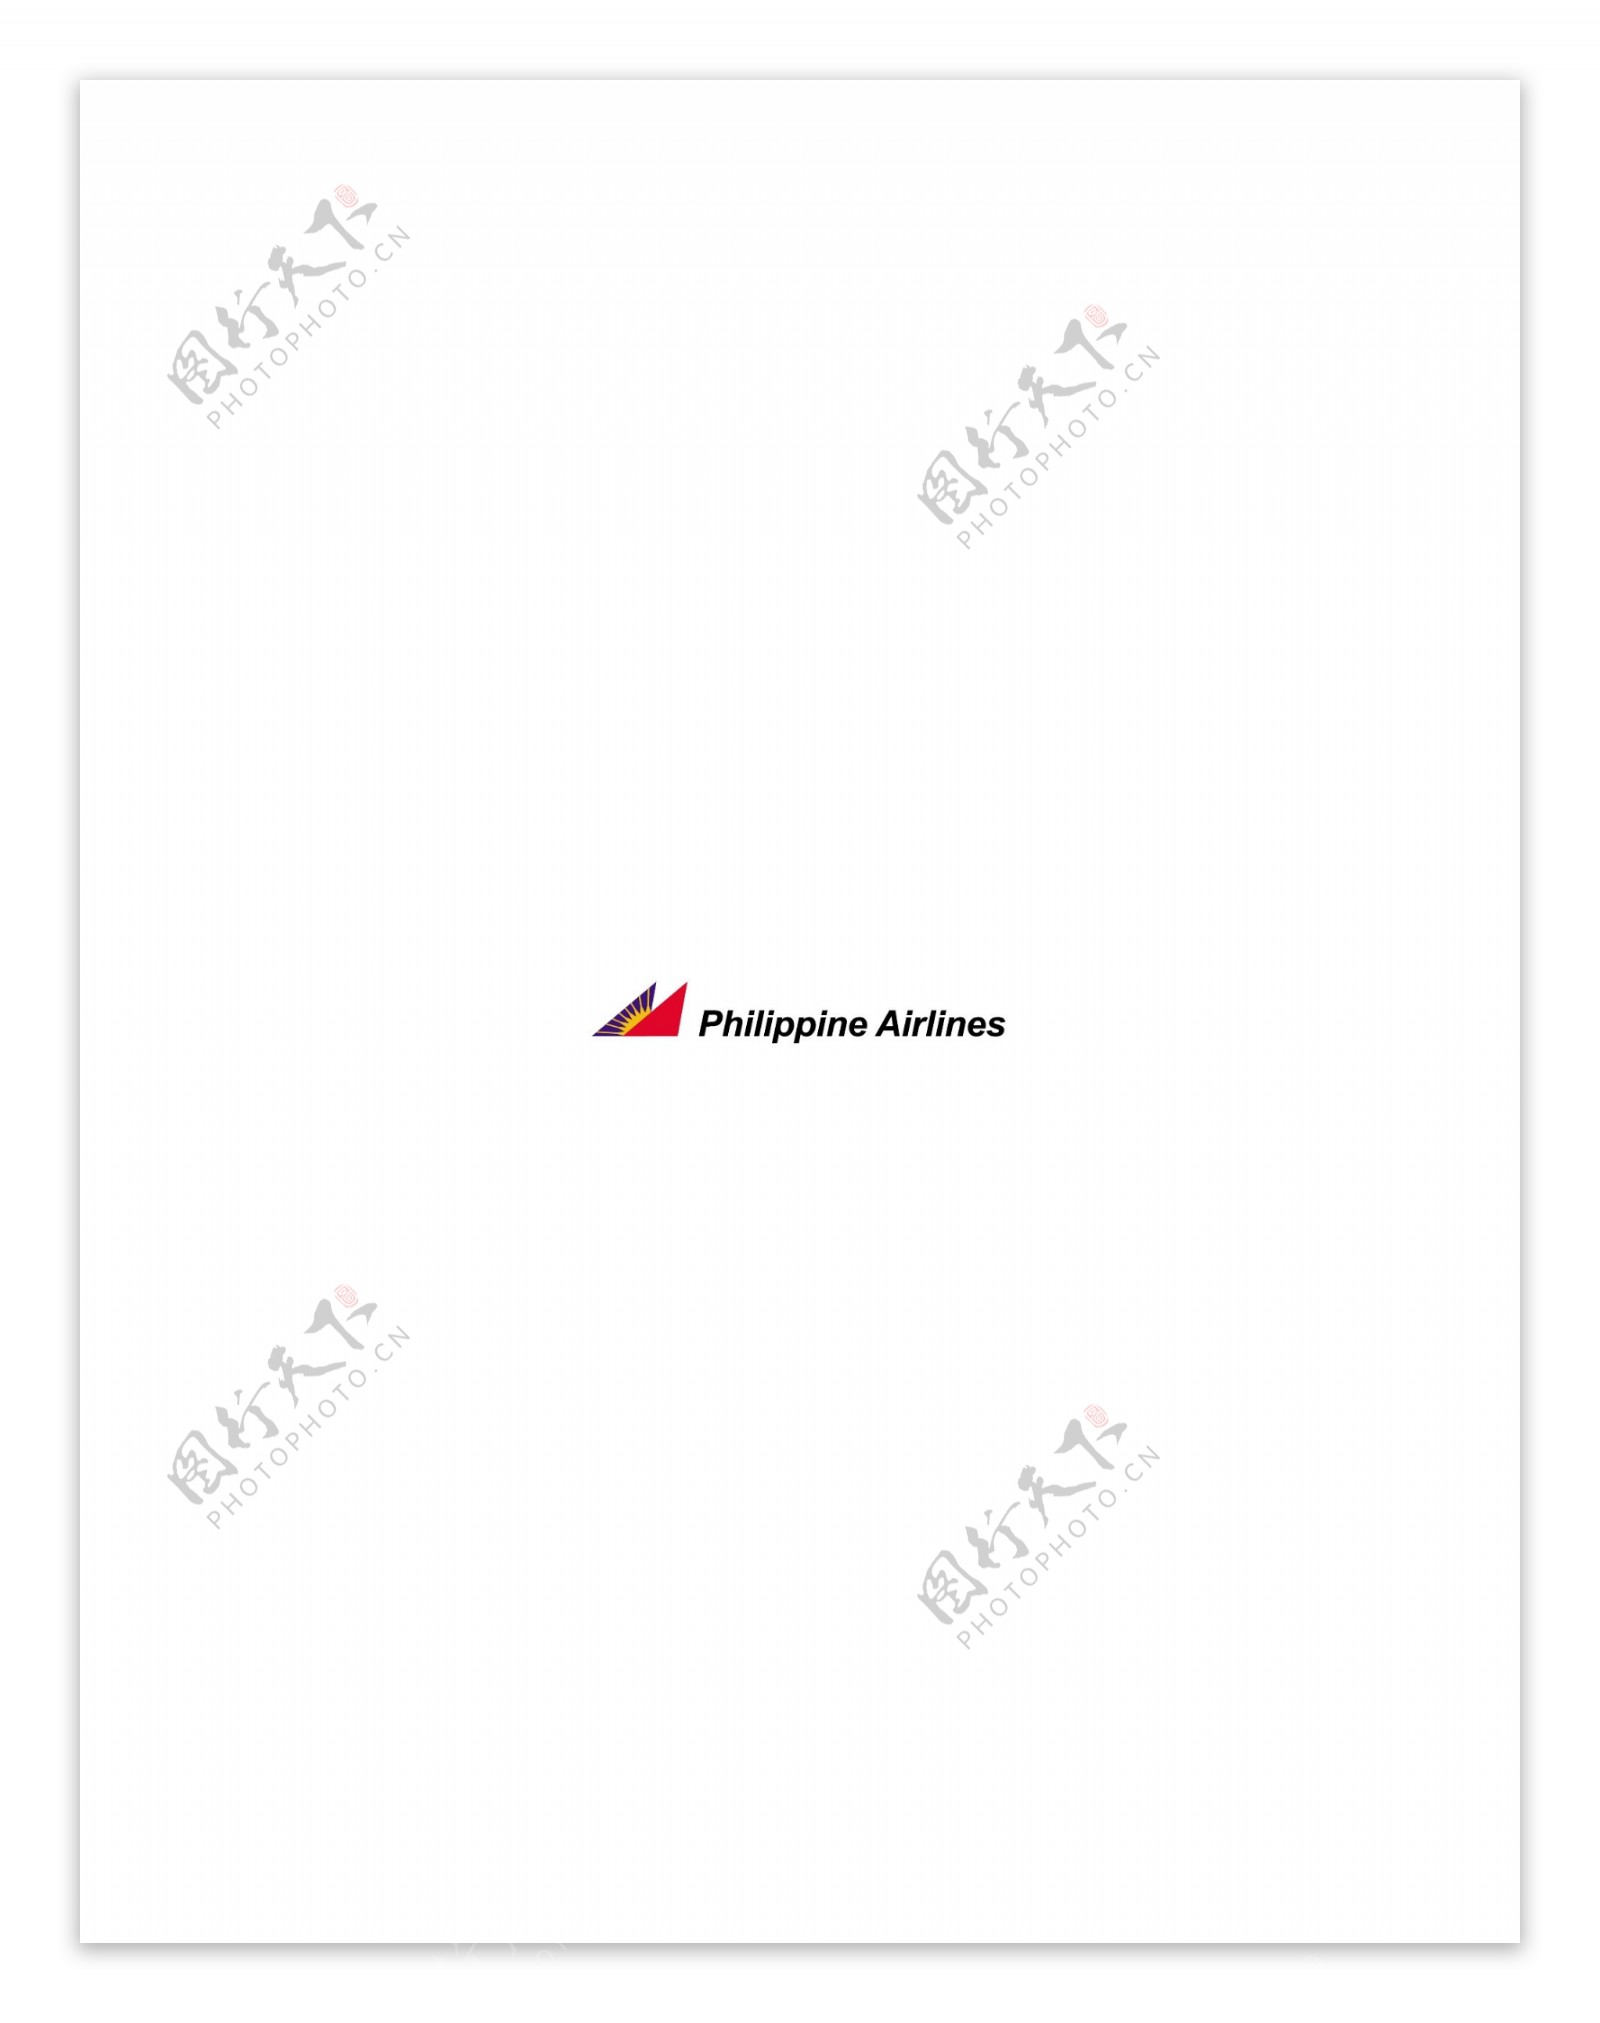 PhilippineAirlineslogo设计欣赏PhilippineAirlines民航业LOGO下载标志设计欣赏